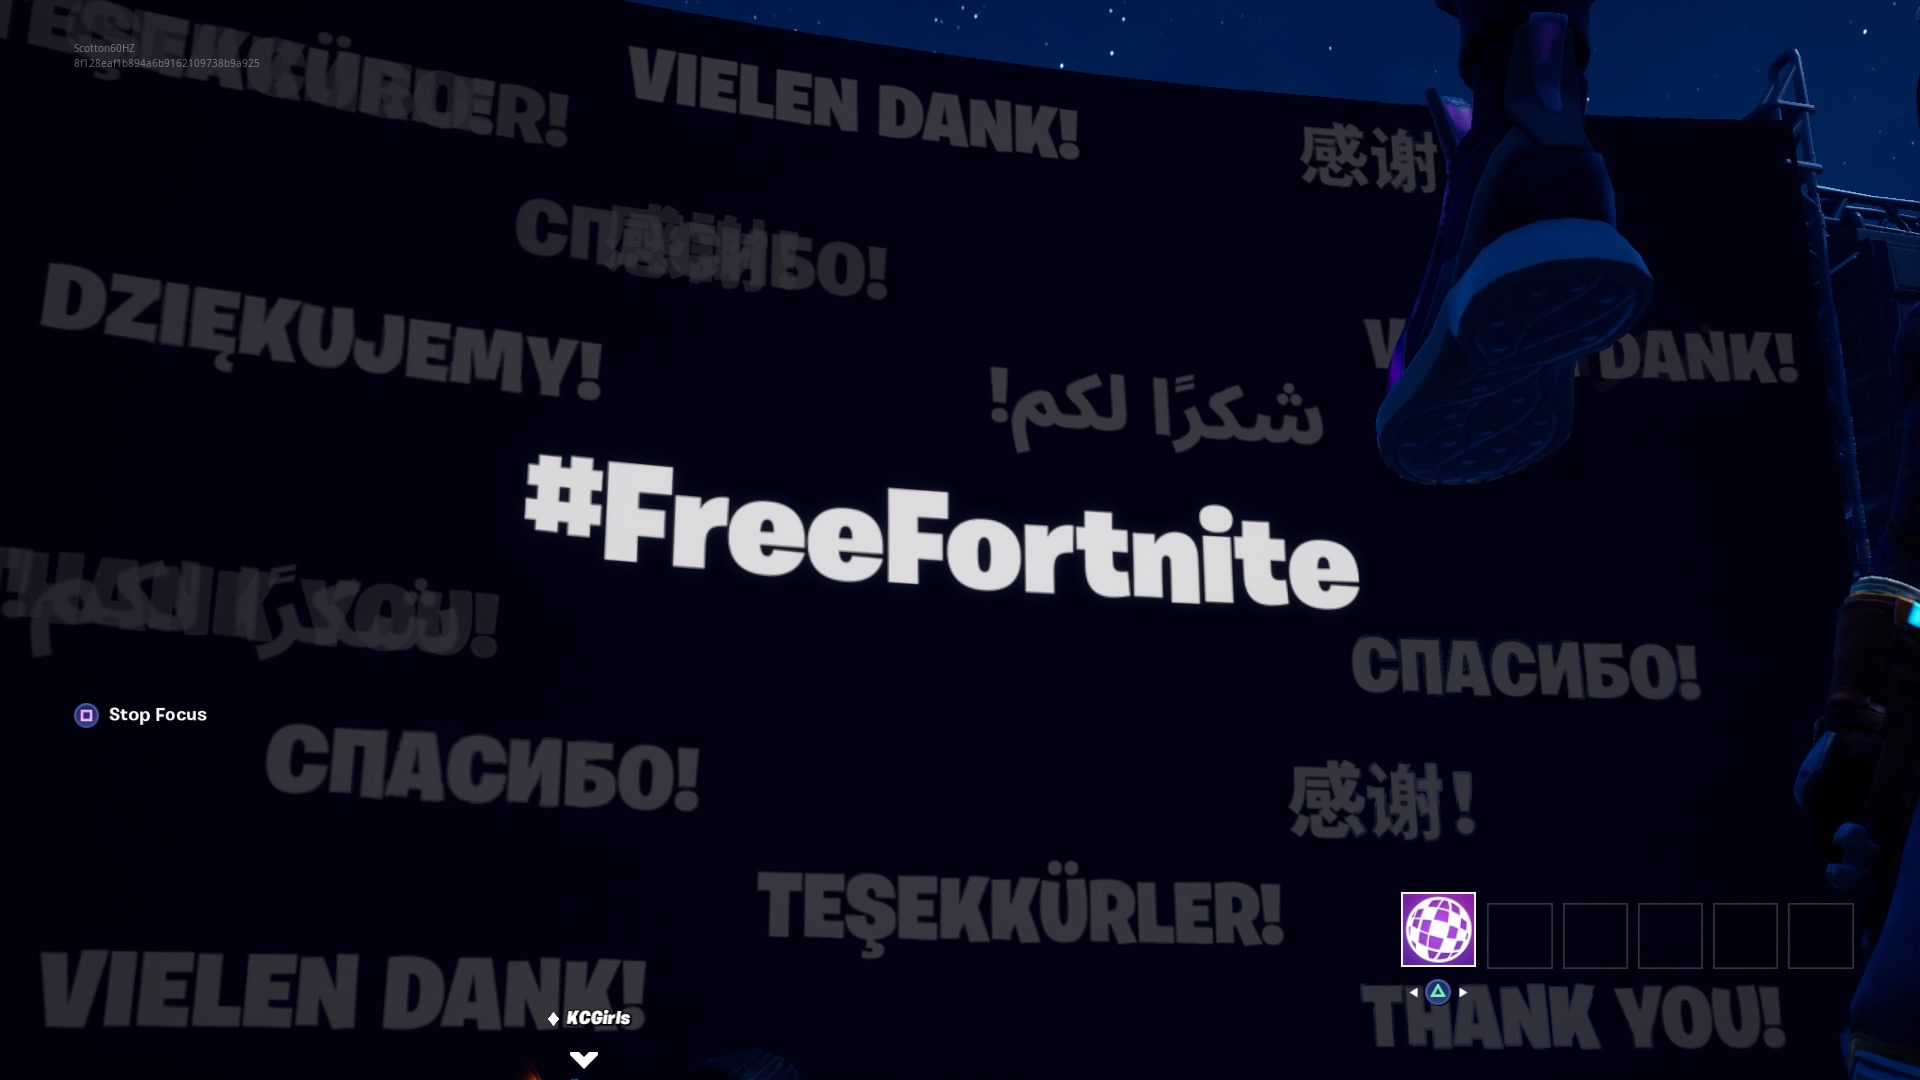 Free Fortnite wallpapers